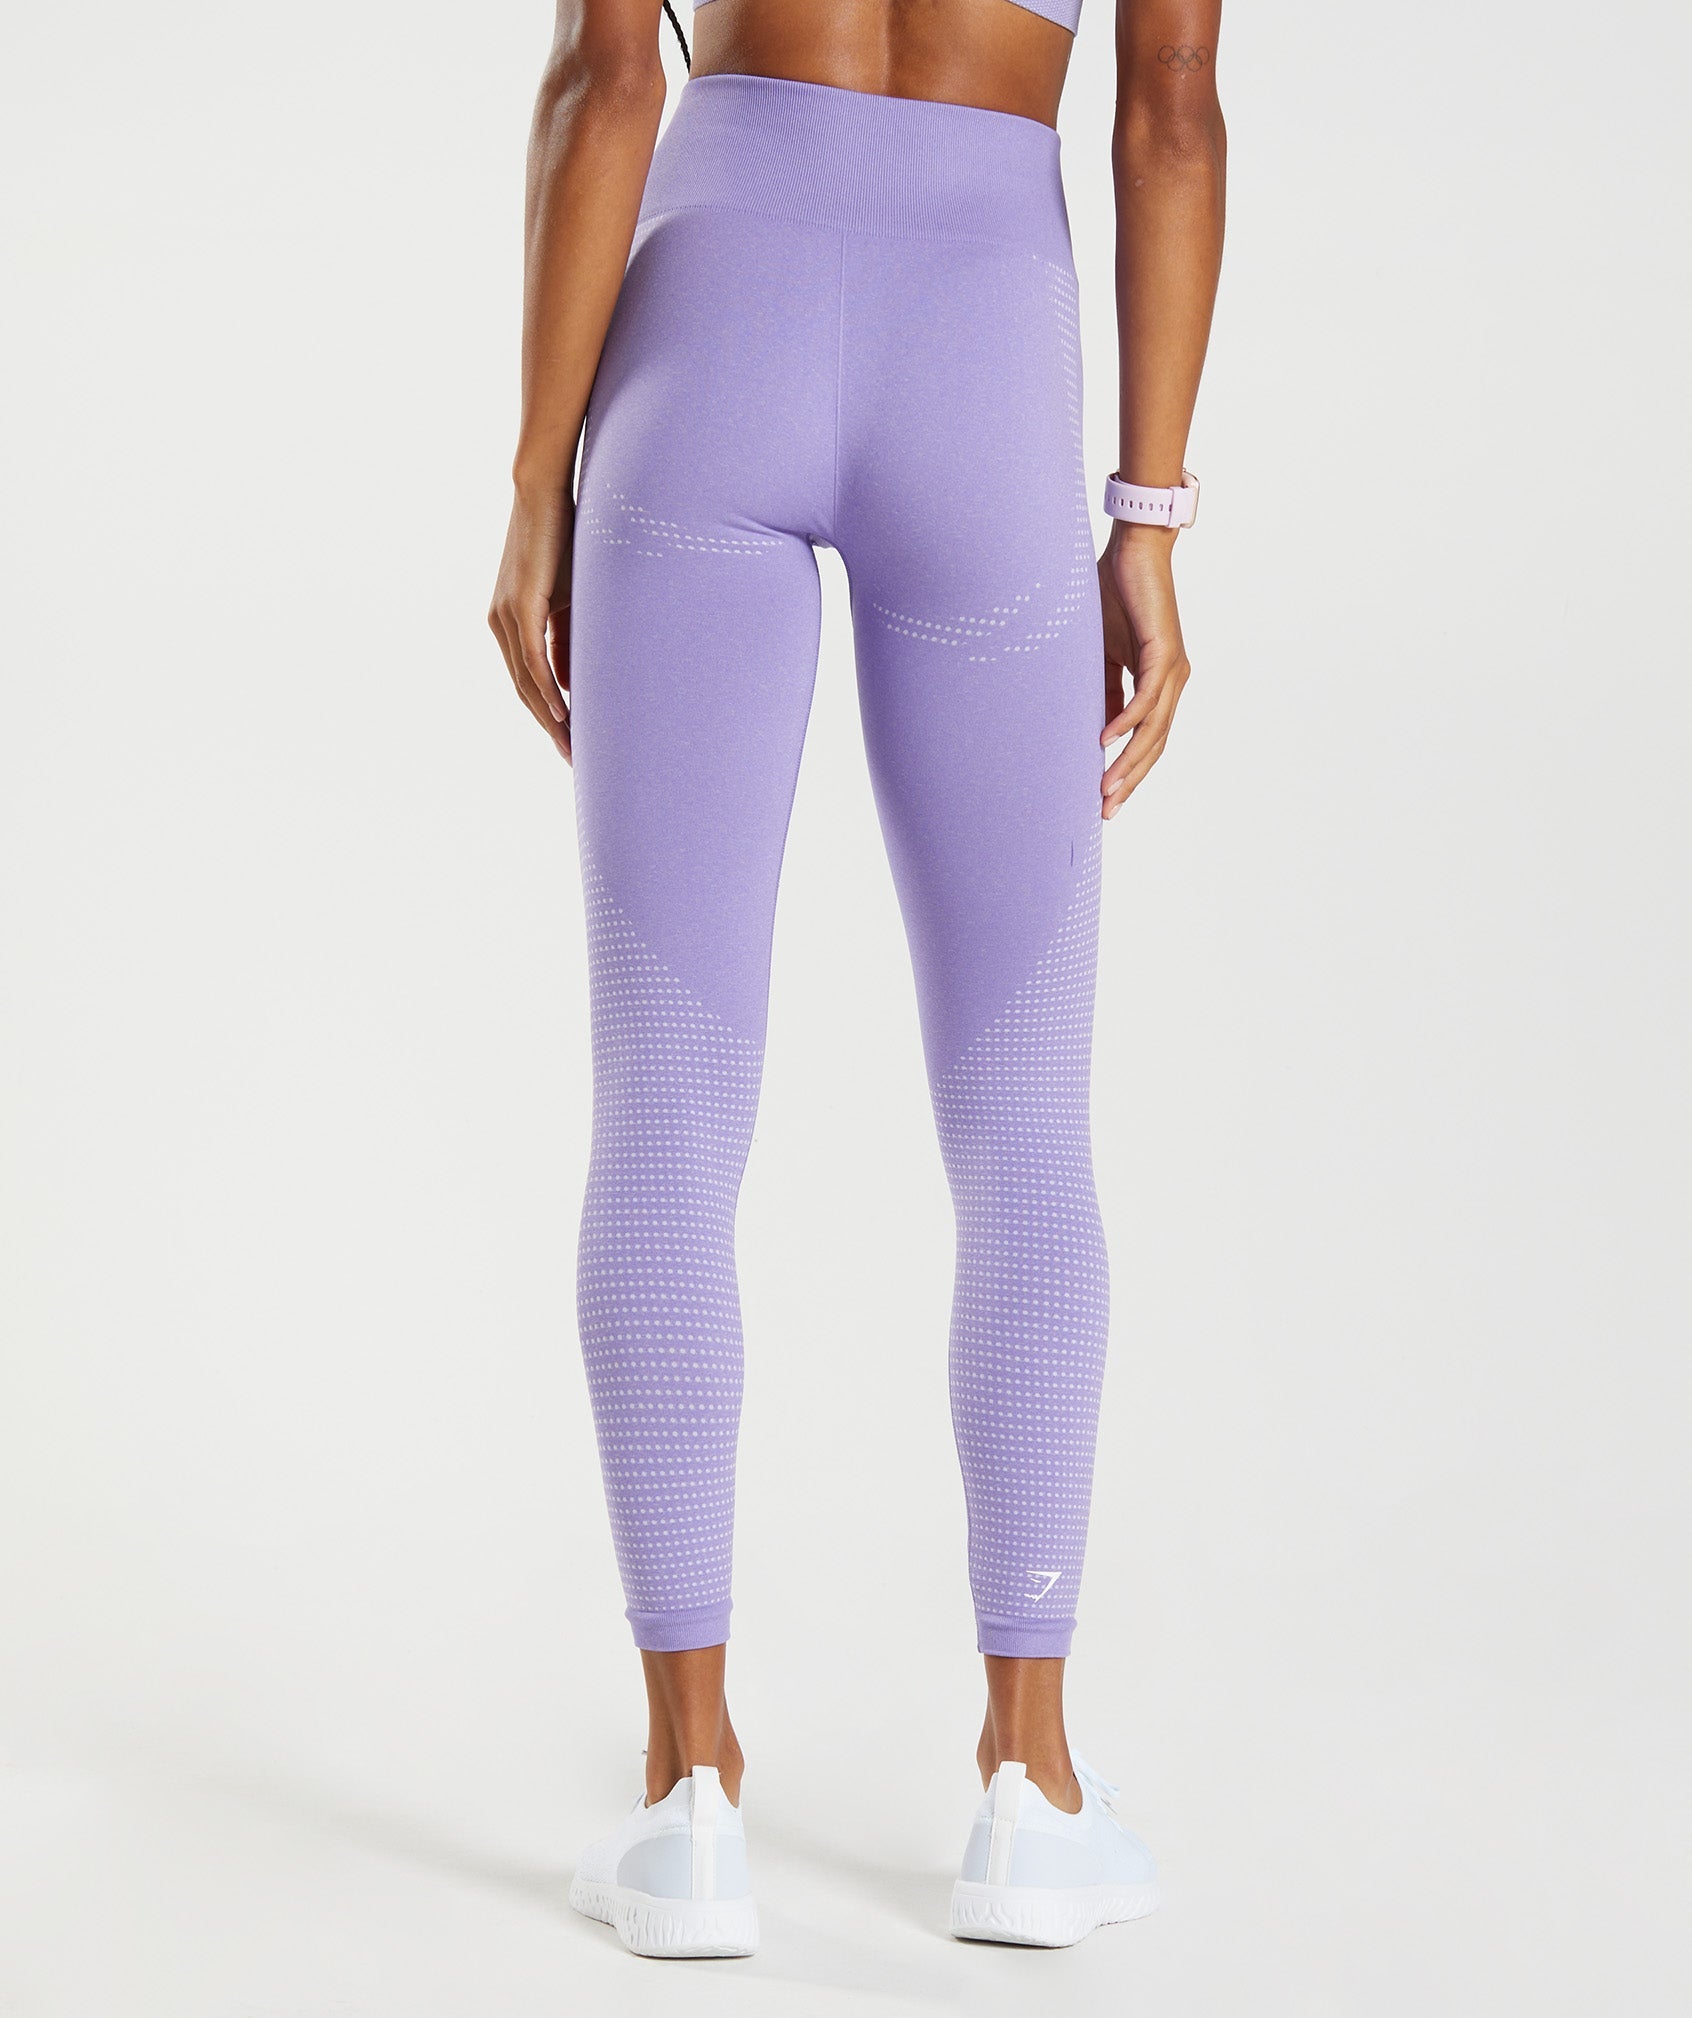 All Access Koral Women's Activewear Leggings Purple Gray Size Medium Lot 2